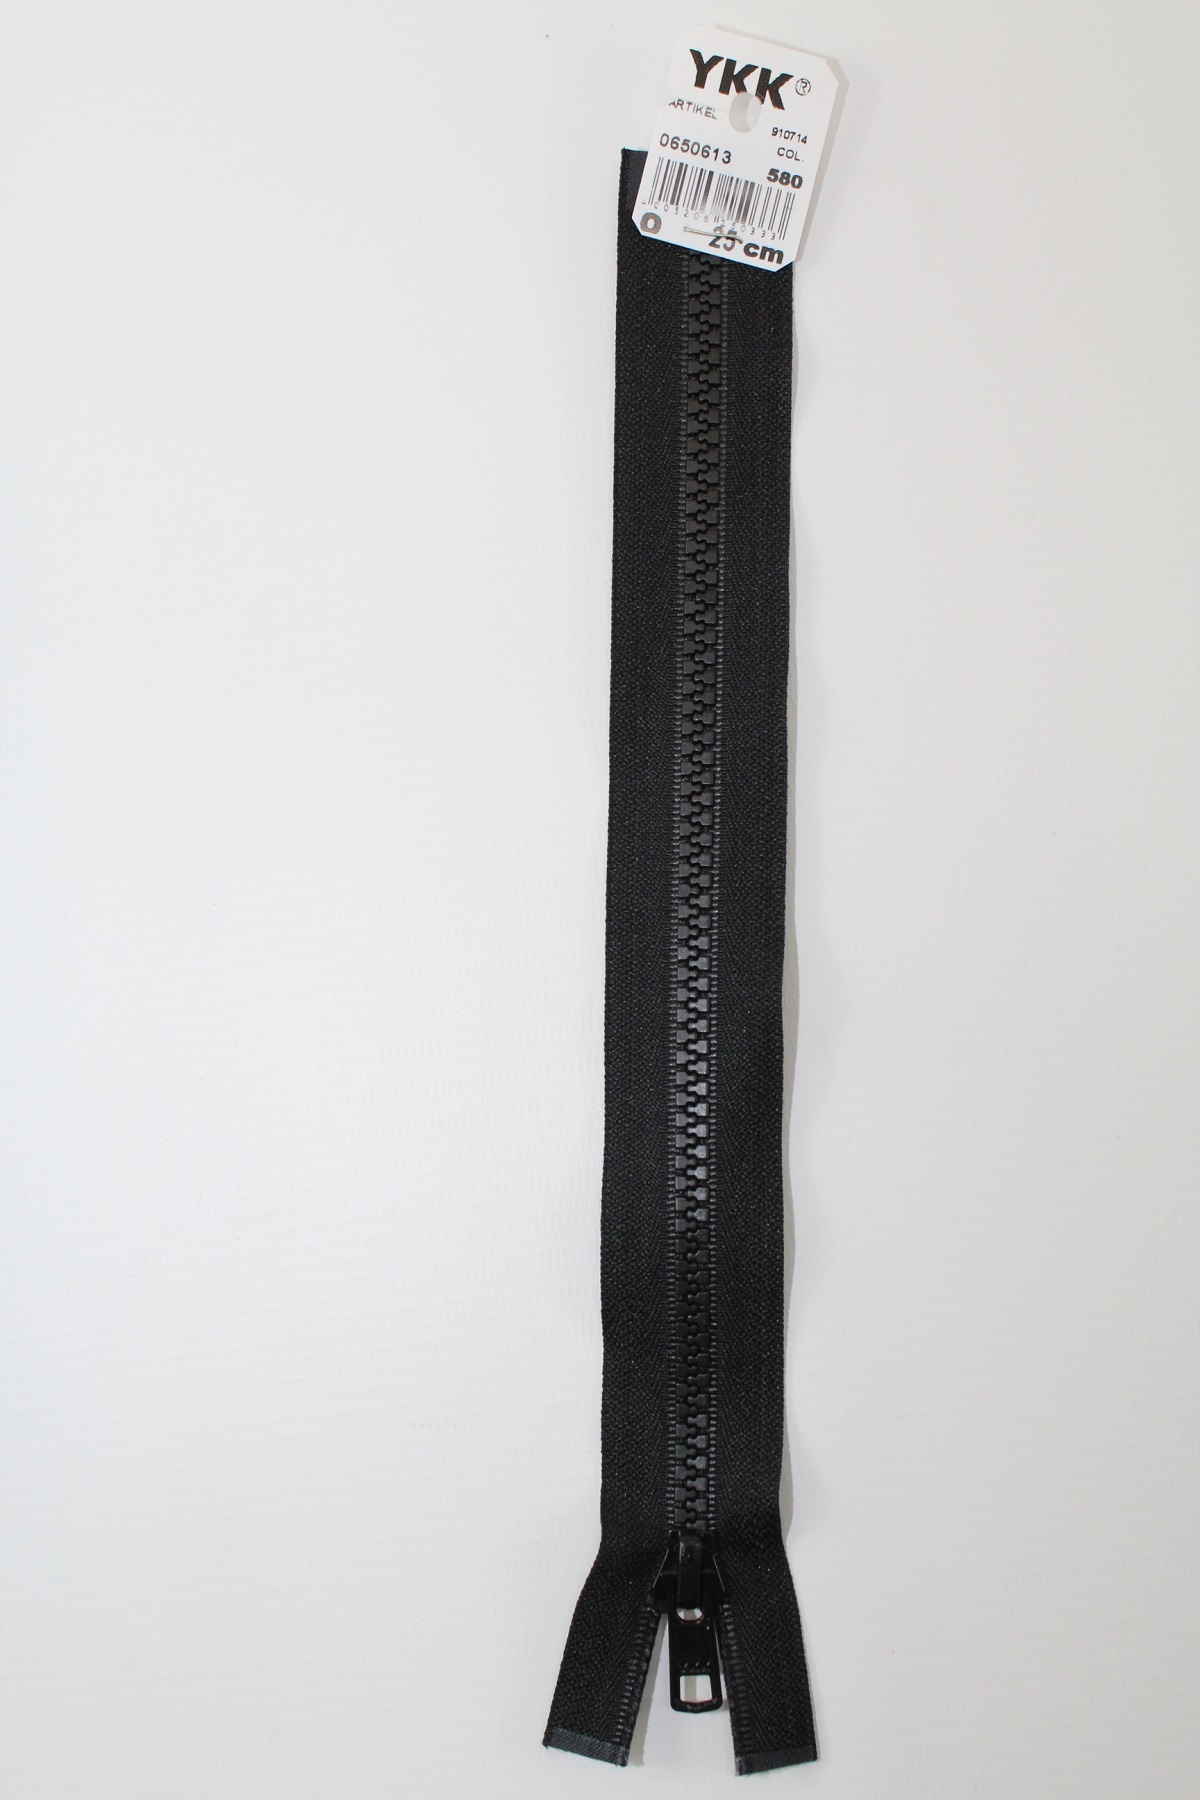 YKK - Reissverschlüsse 25 cm - 80 cm, teilbar, schwarz